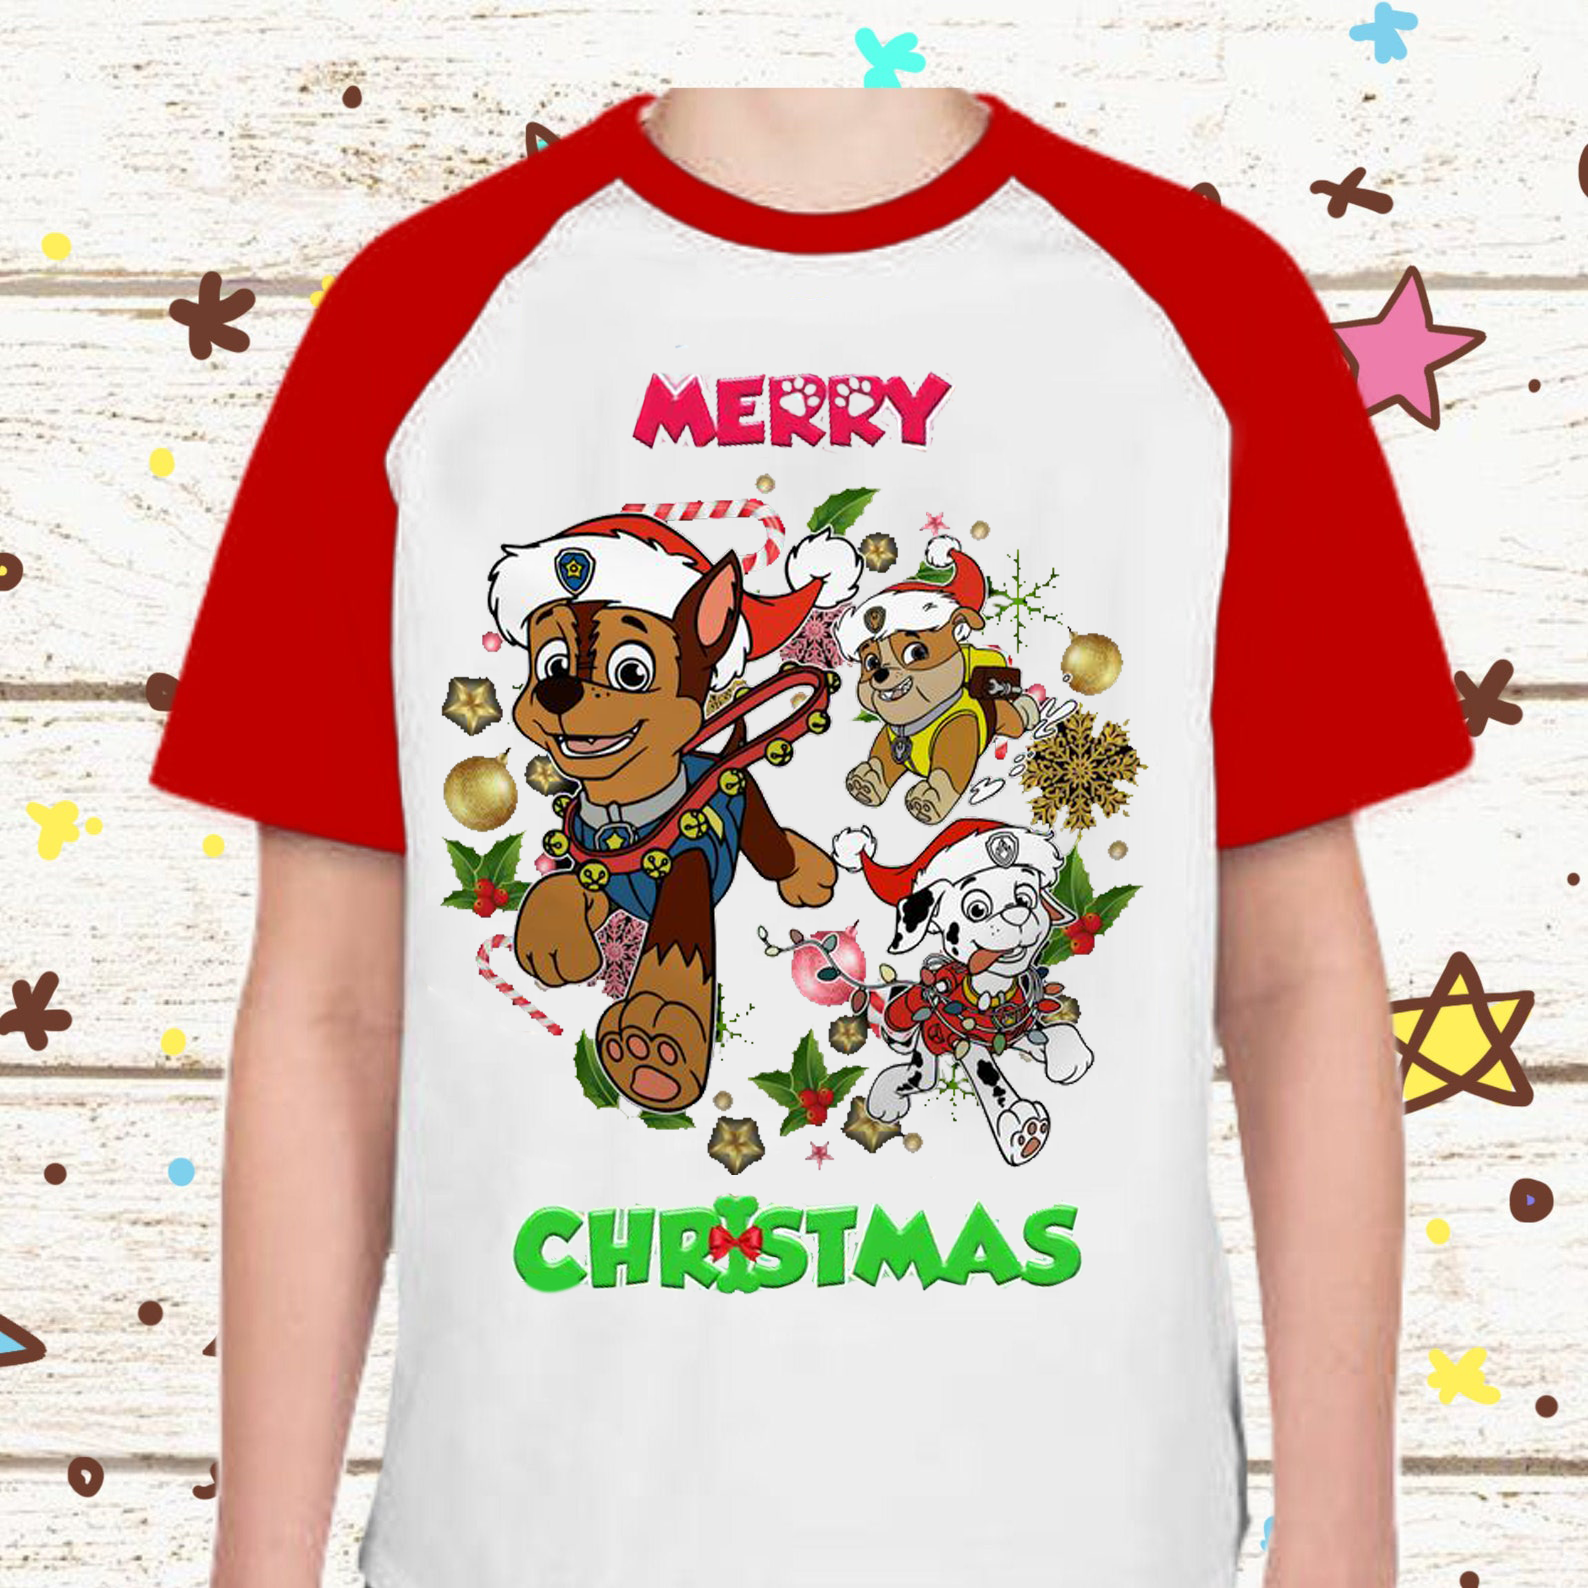 Cute Merrry Christmas Paw Patrol Shirt, Paw Patrol Christmas Theme Party, Kids Shirt, Christmas Gift shirt, Birthday Gift